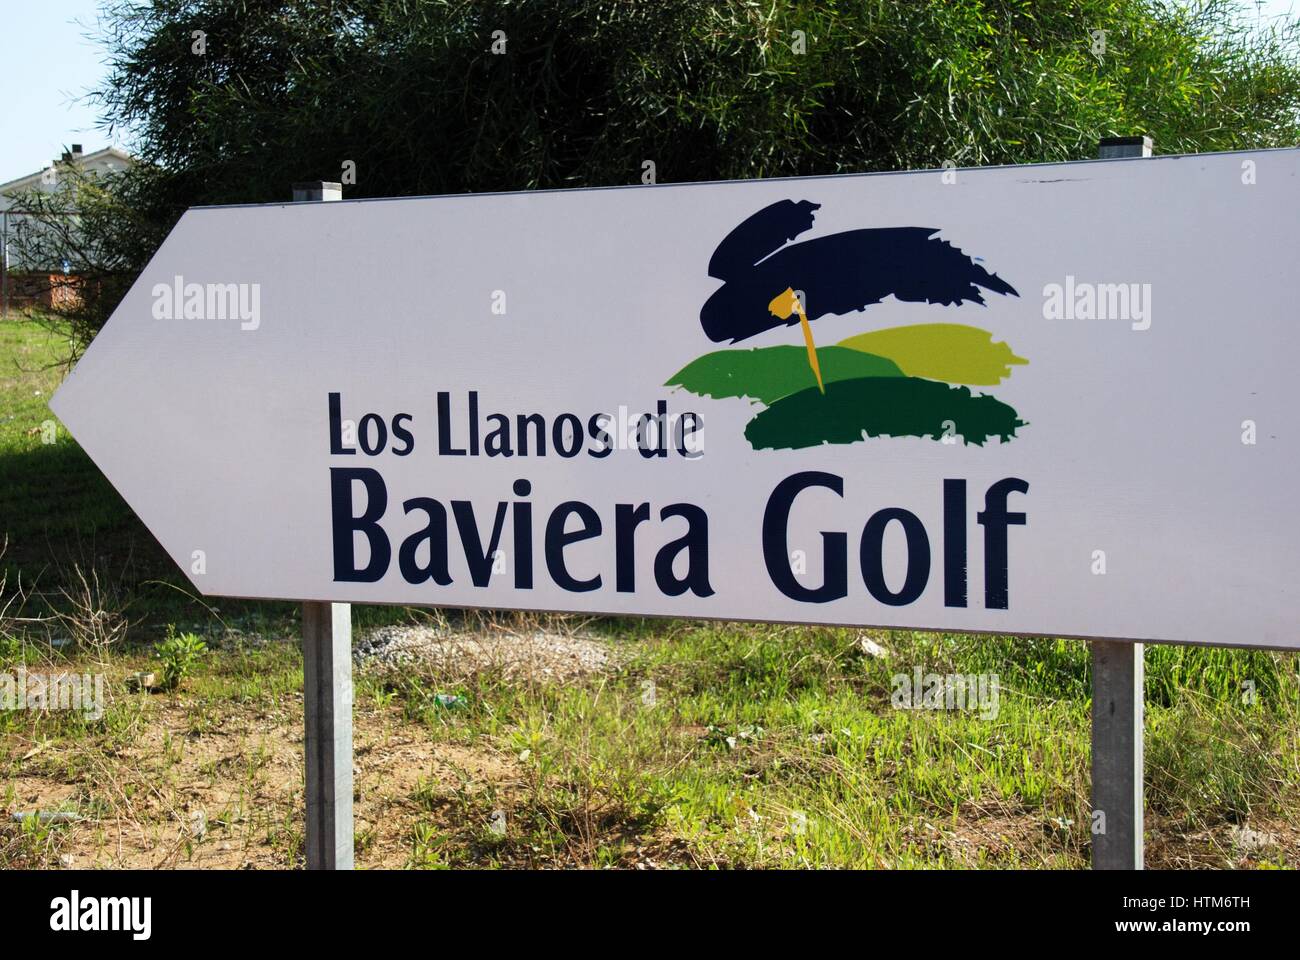 Los Llanos de Baviera Golf club sign, Caleta de Velez, Malaga Province, Andalusia, Spain, Western Europe. Stock Photo